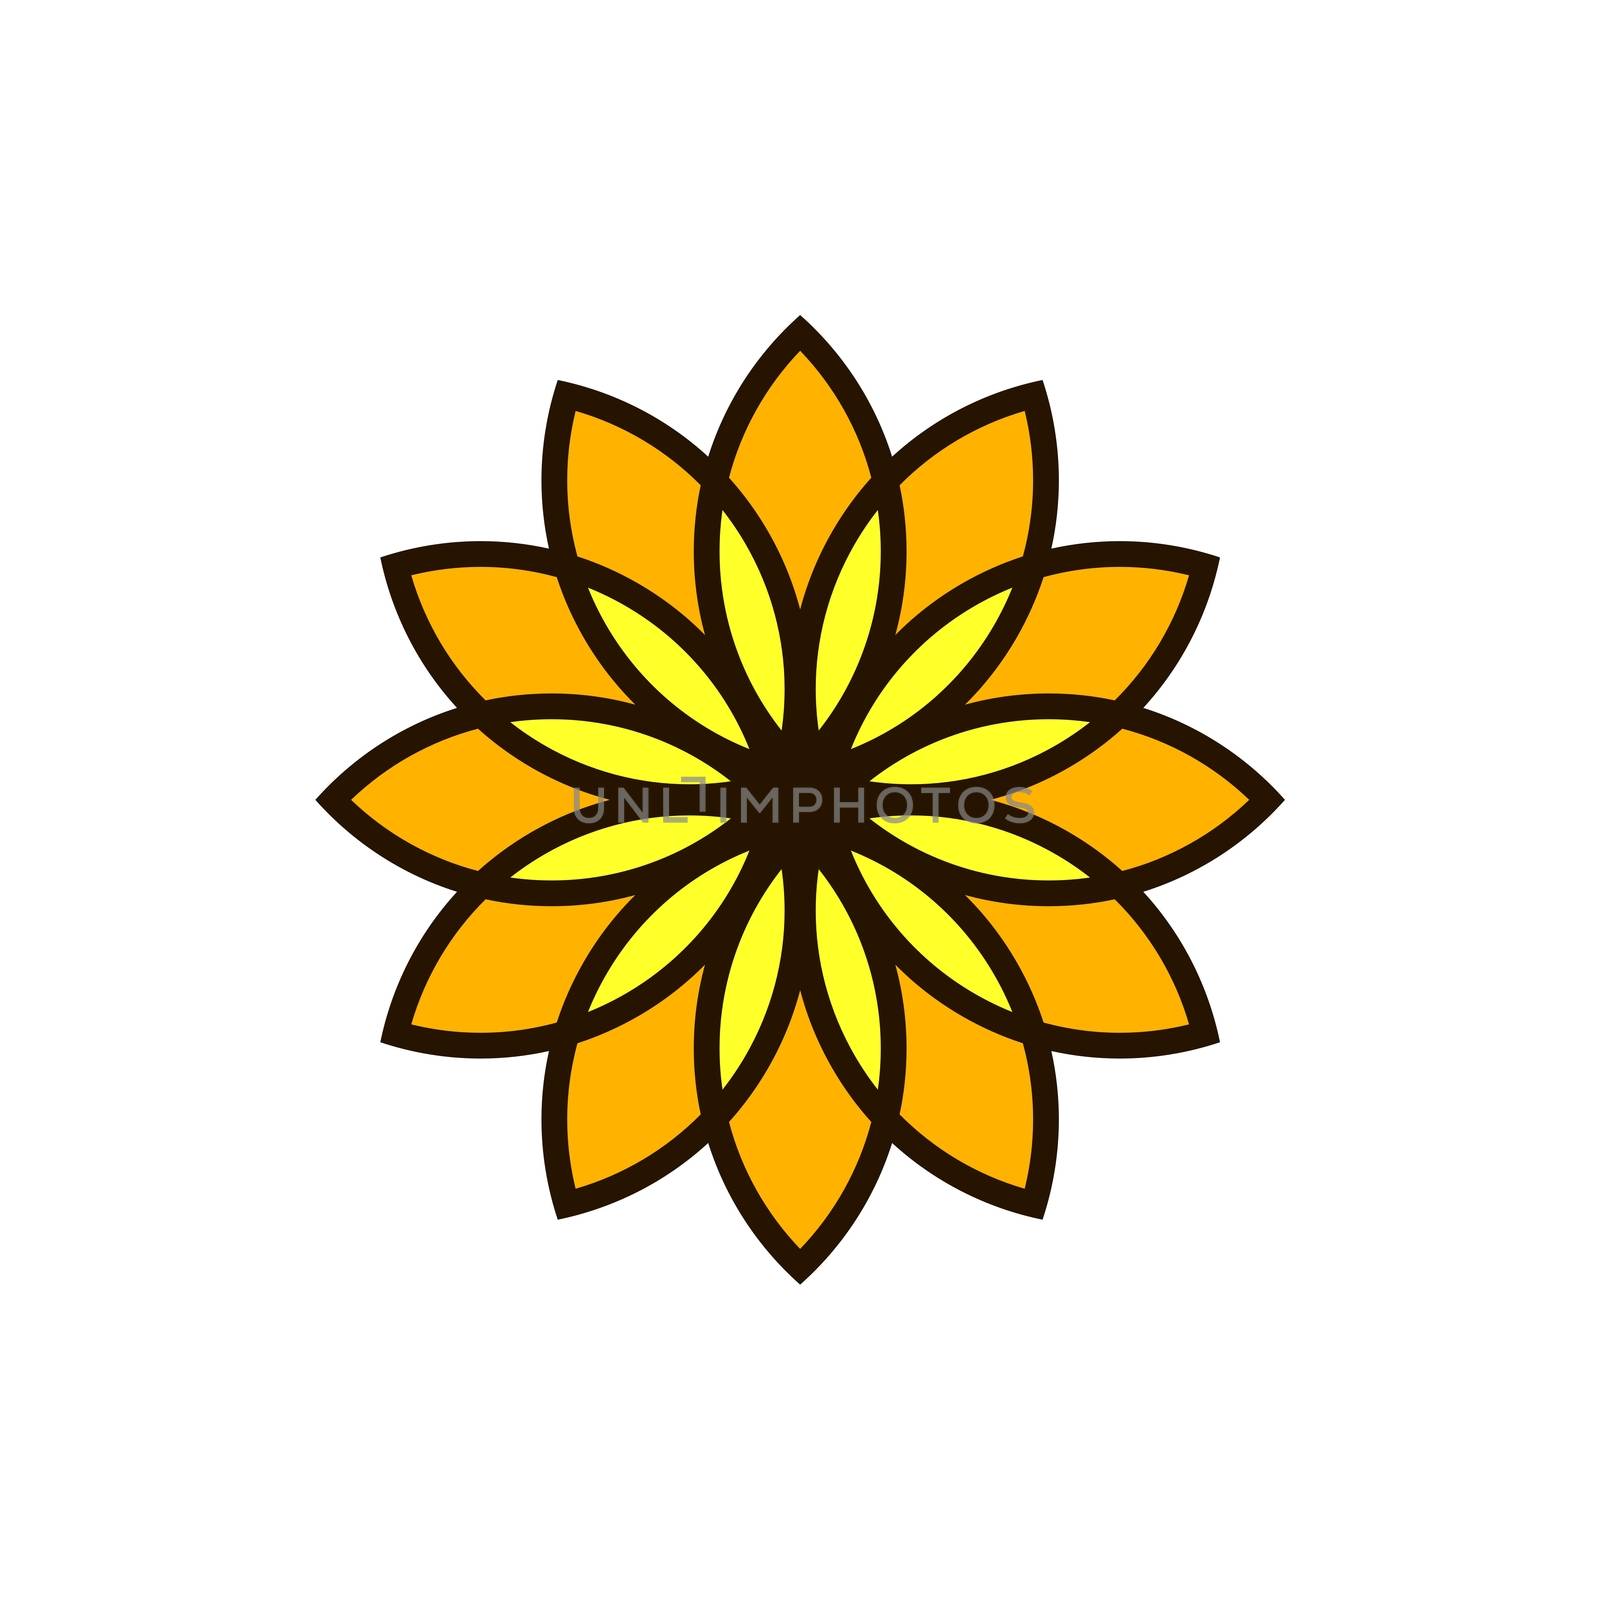 Abstract Sun Flower Logo Template Illustration Design EPS 10